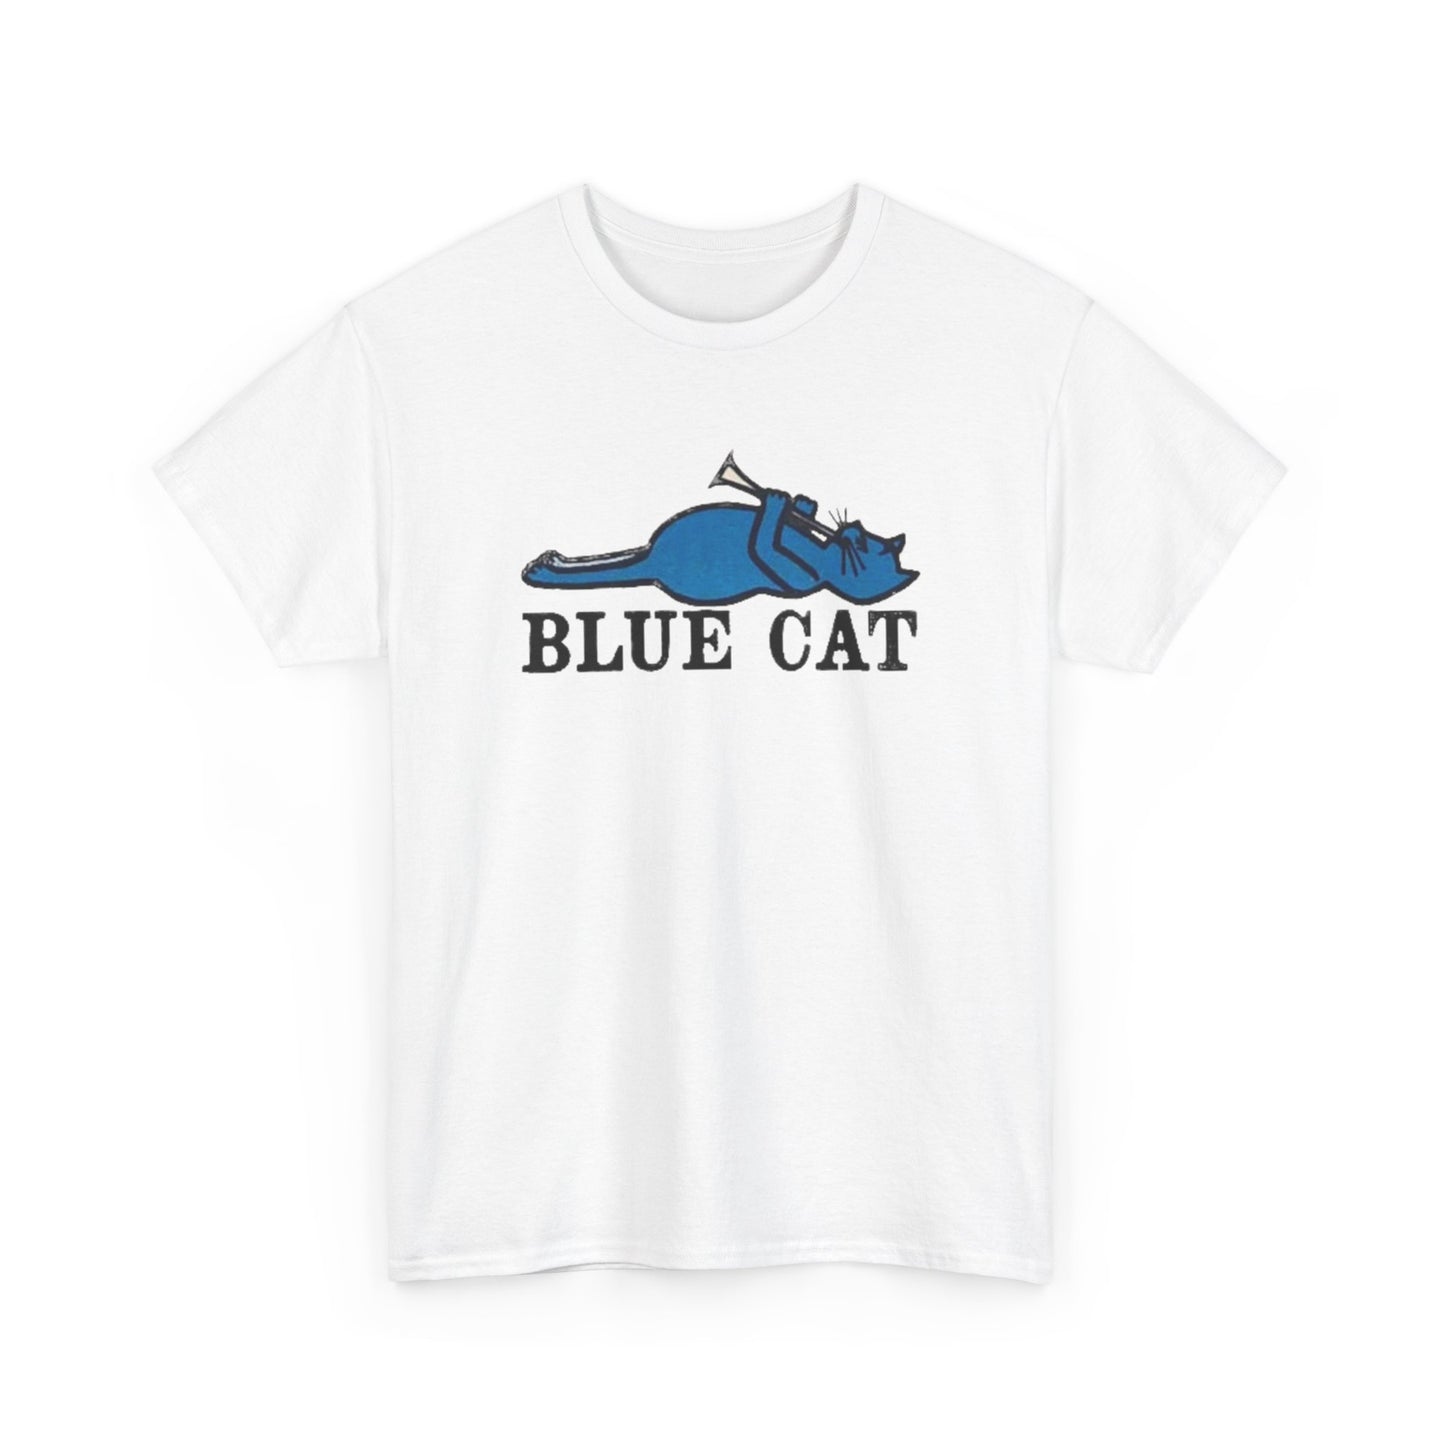 Music Label Tee #104: Blue Cat